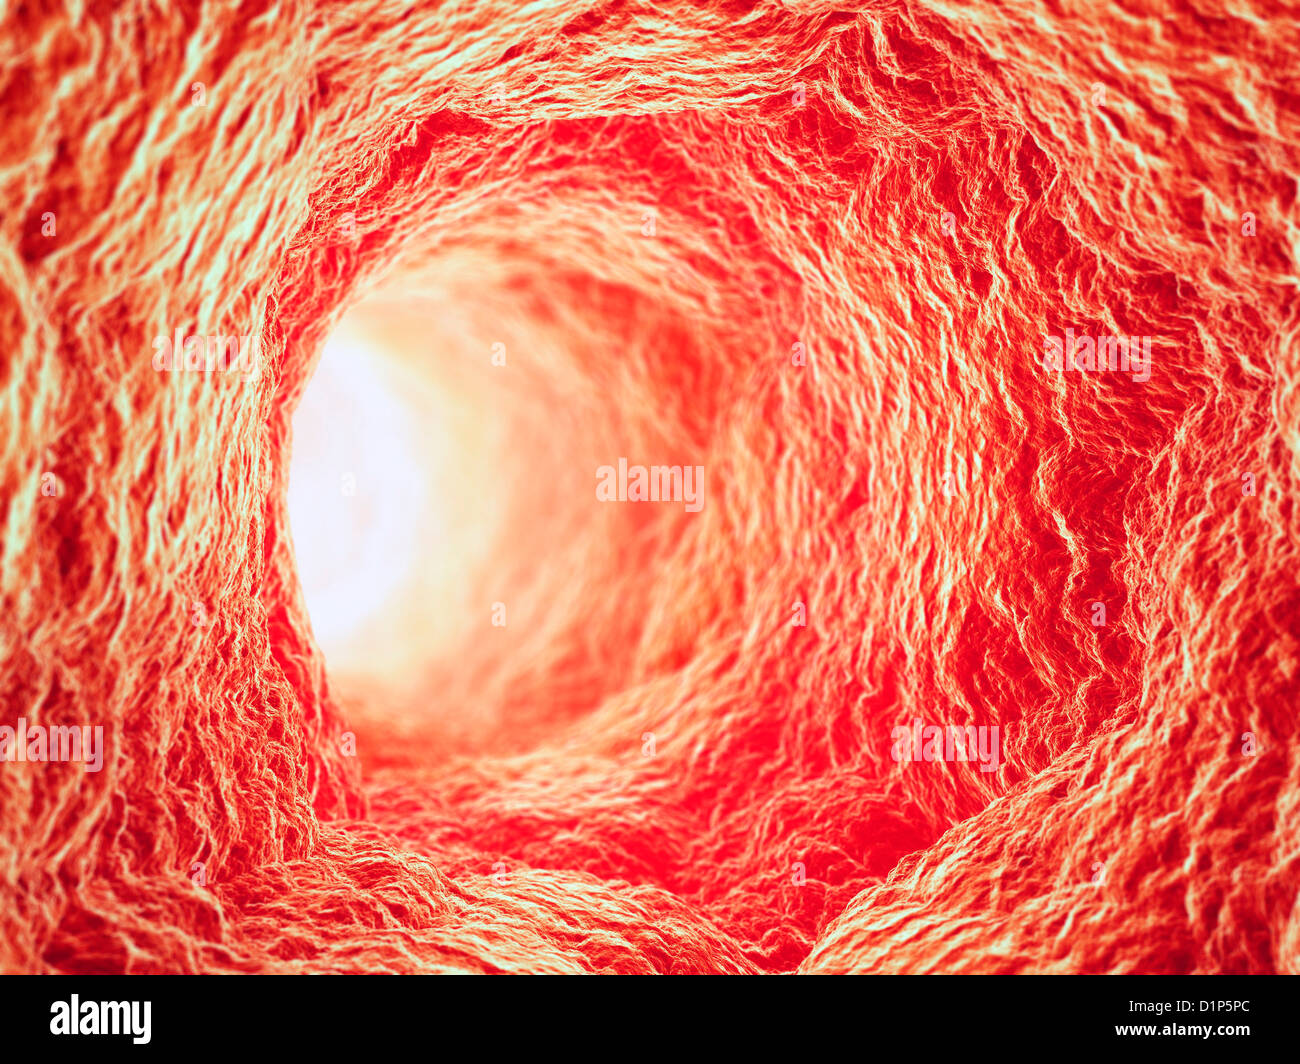 Blood vessel interior, artwork Stock Photo